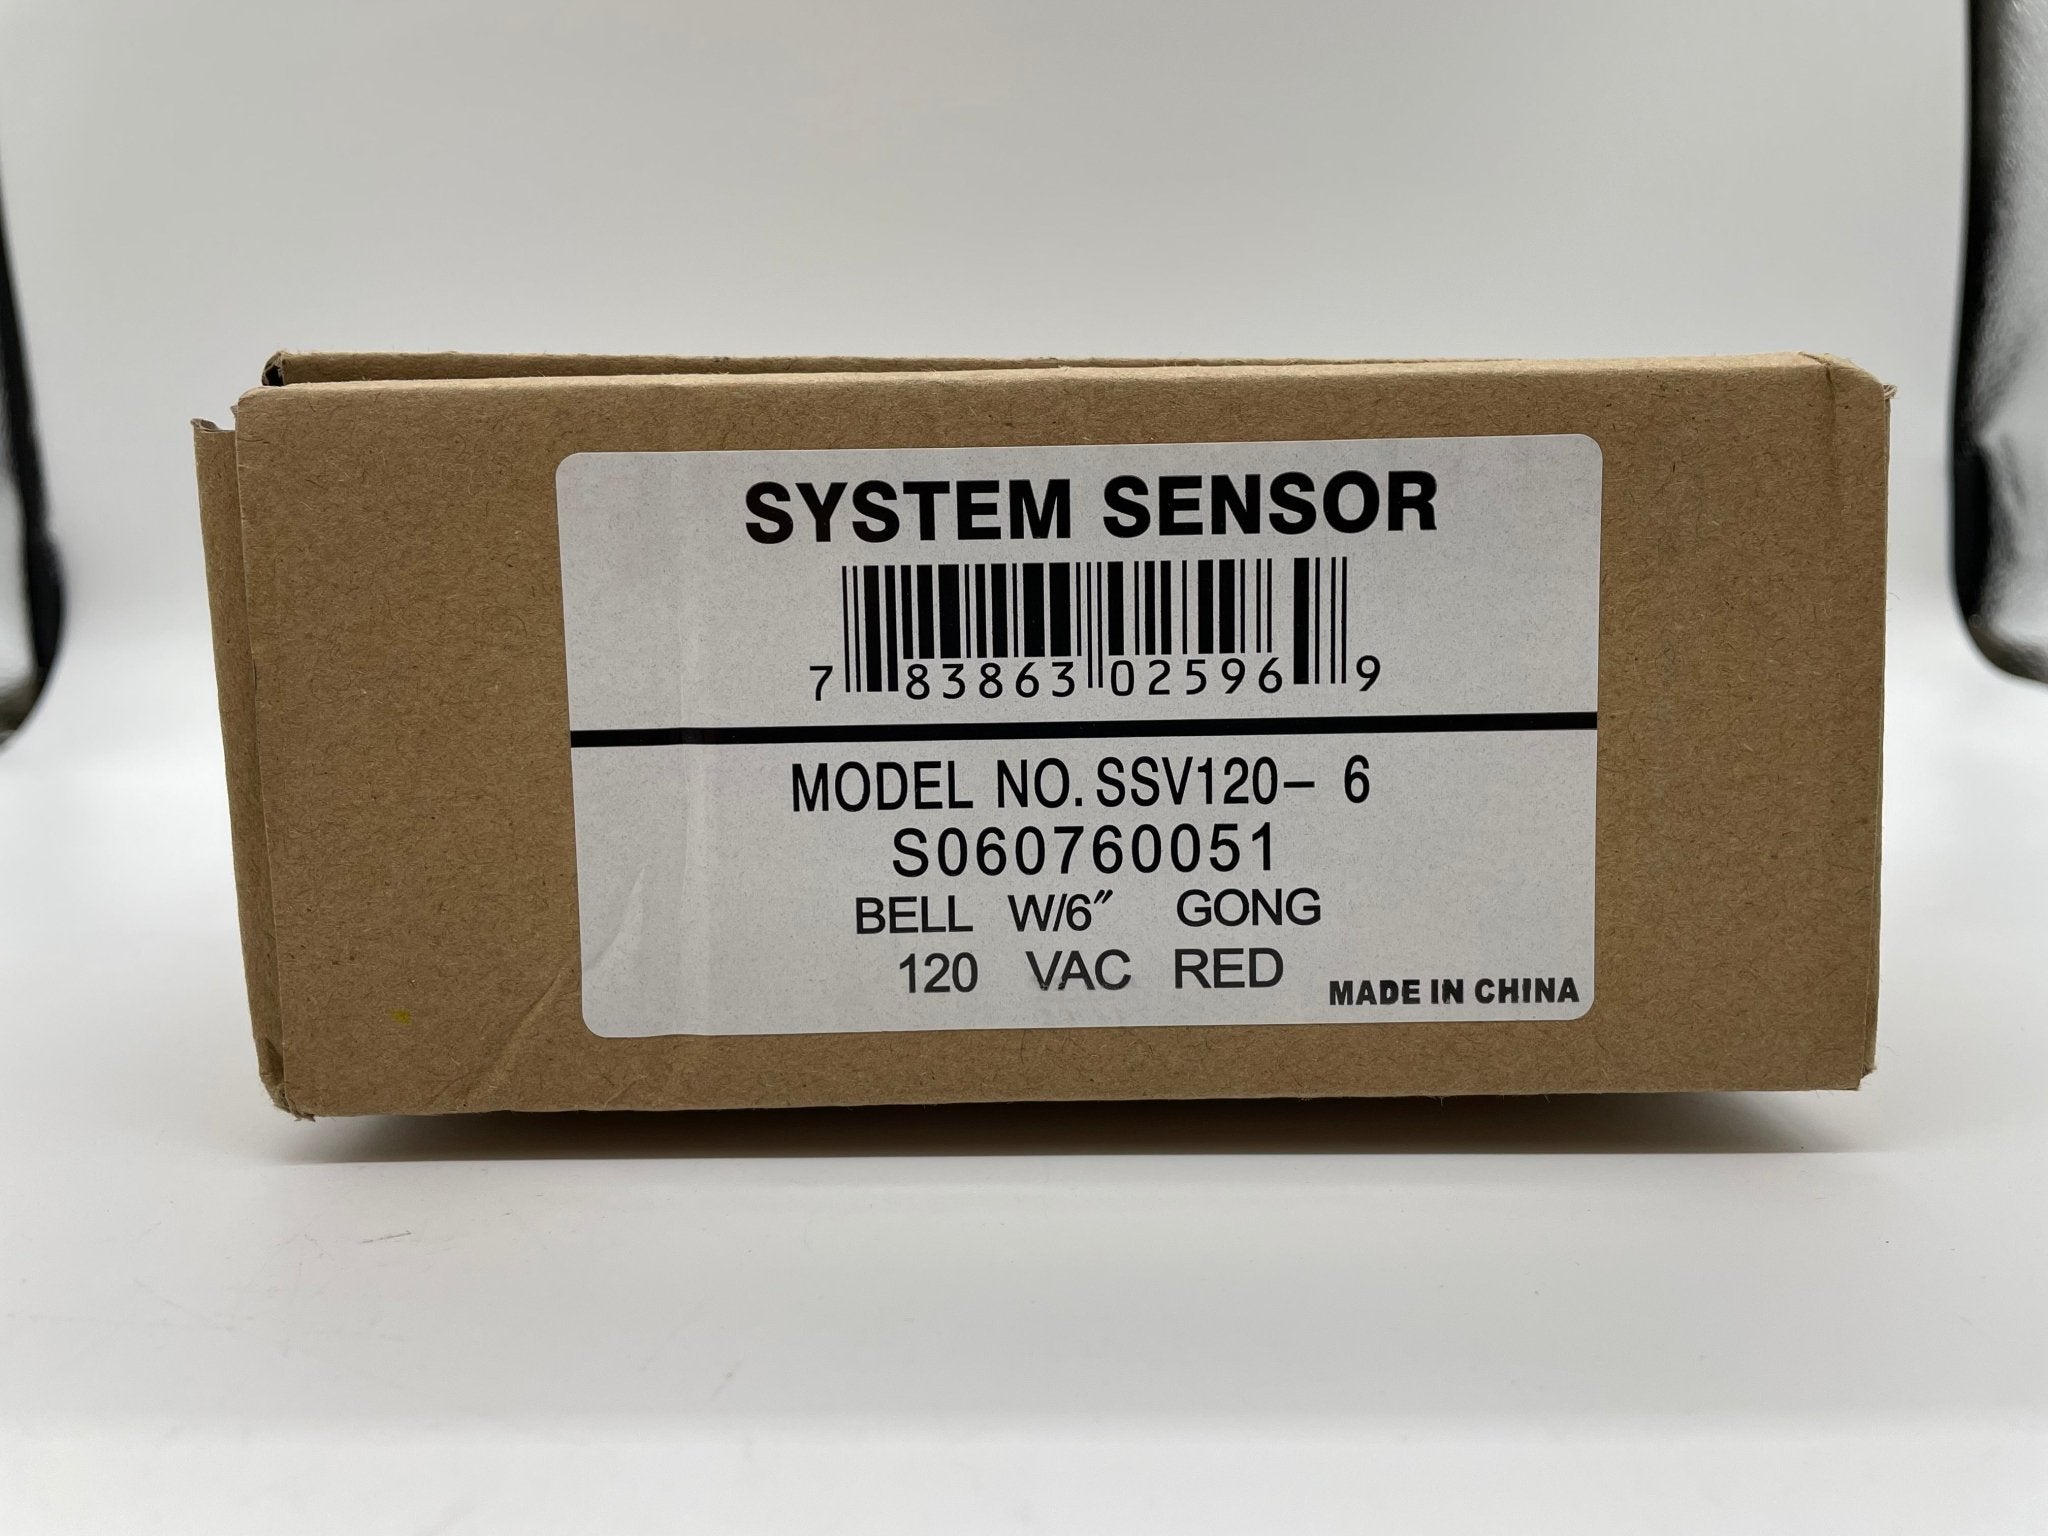 System Sensor SSV120-6 - The Fire Alarm Supplier